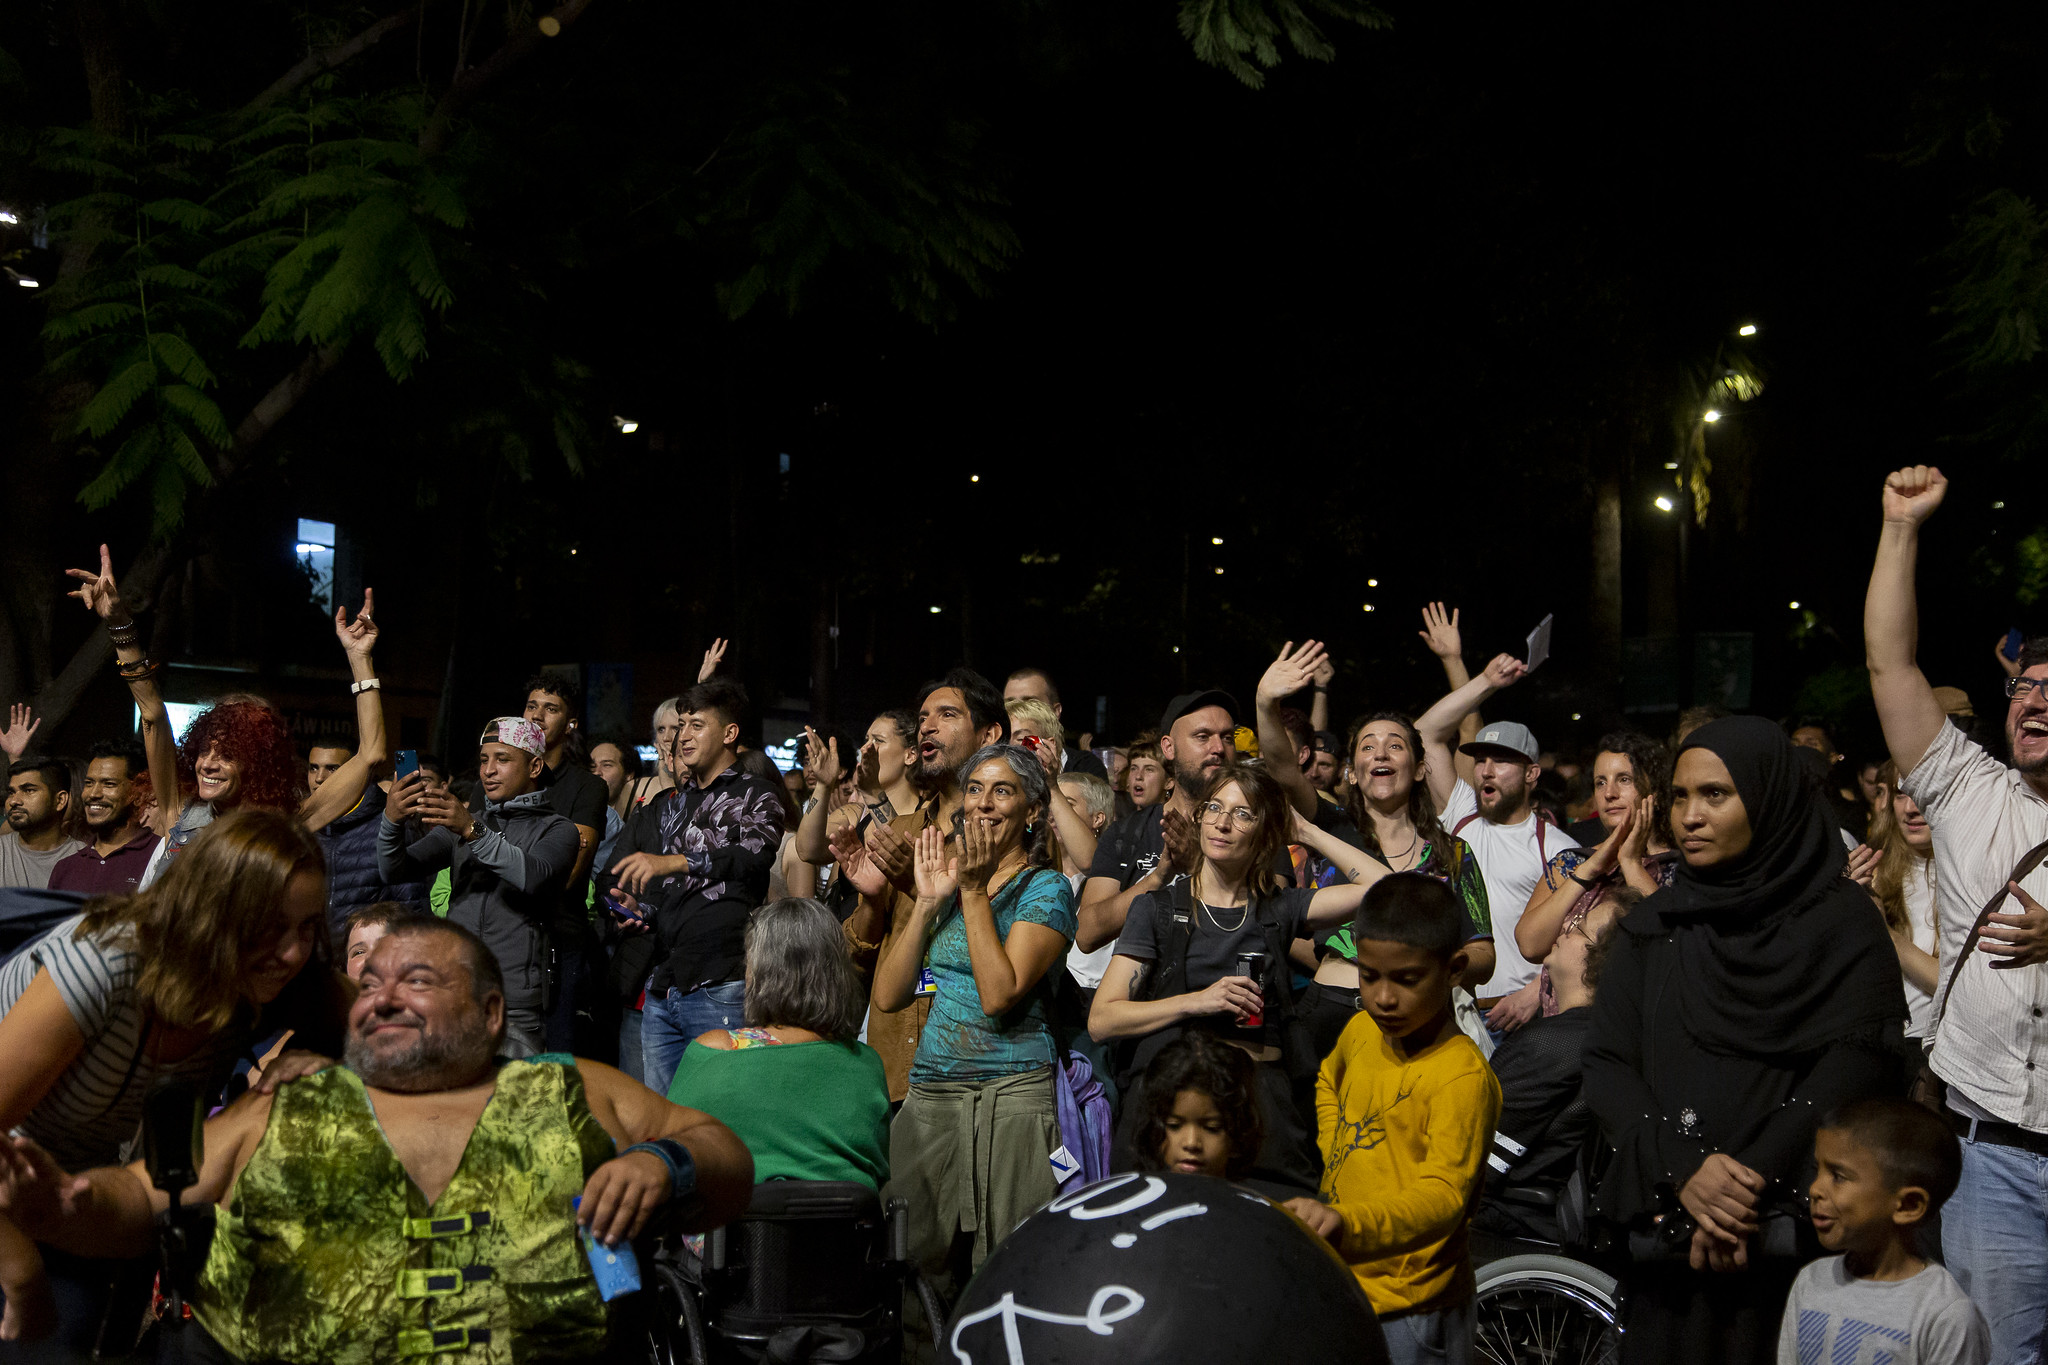 Público que asistió al Diversorium el 23 de septiembre, en Barcelona. © Eva Carasol